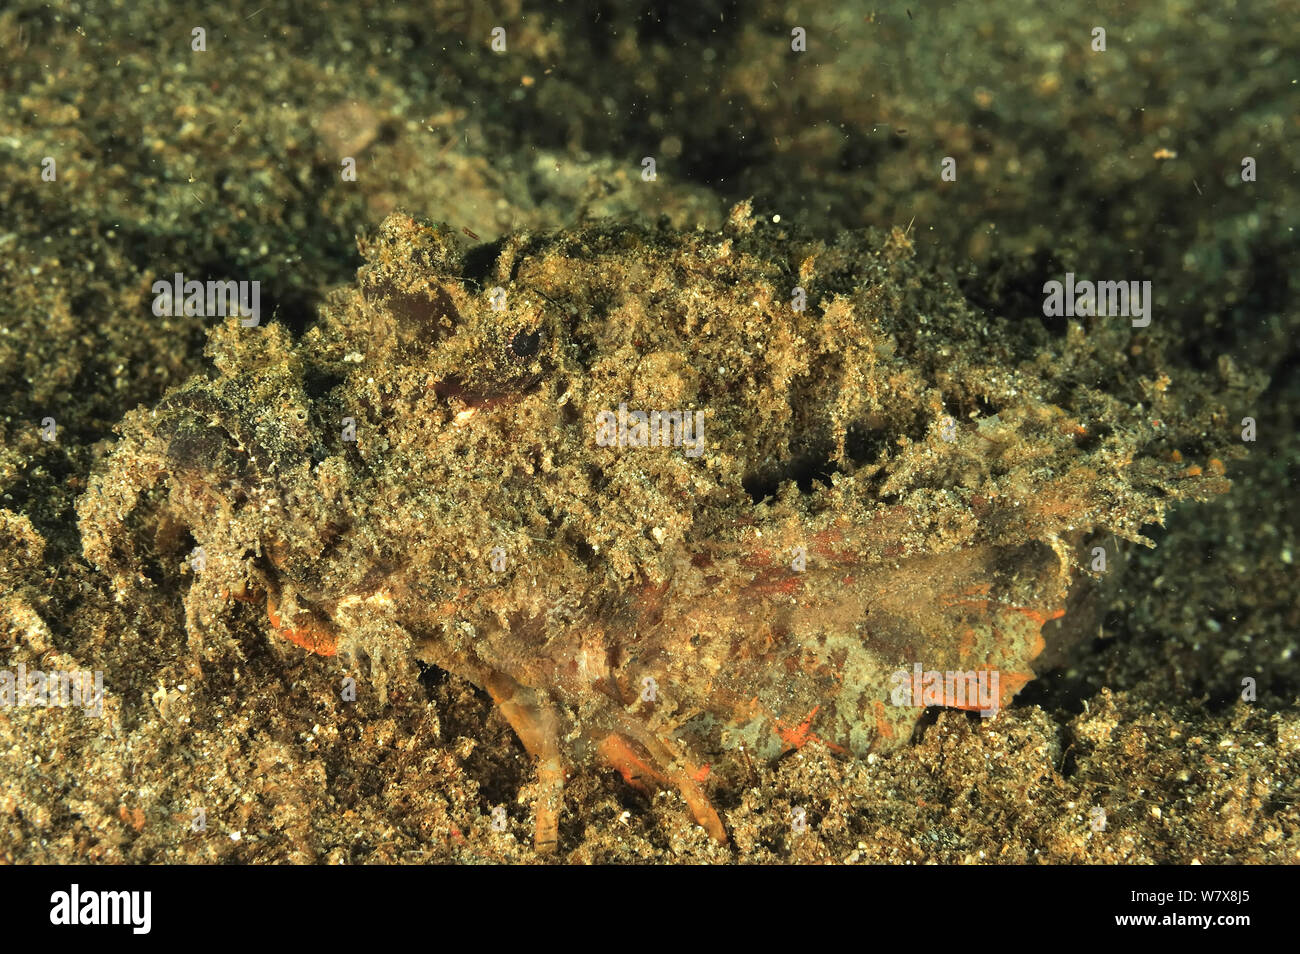 Spiny devilfish (Inimicus didactylus) auf Sand, Manado, Indonesien getarnt. Sulawesi Meer. Stockfoto